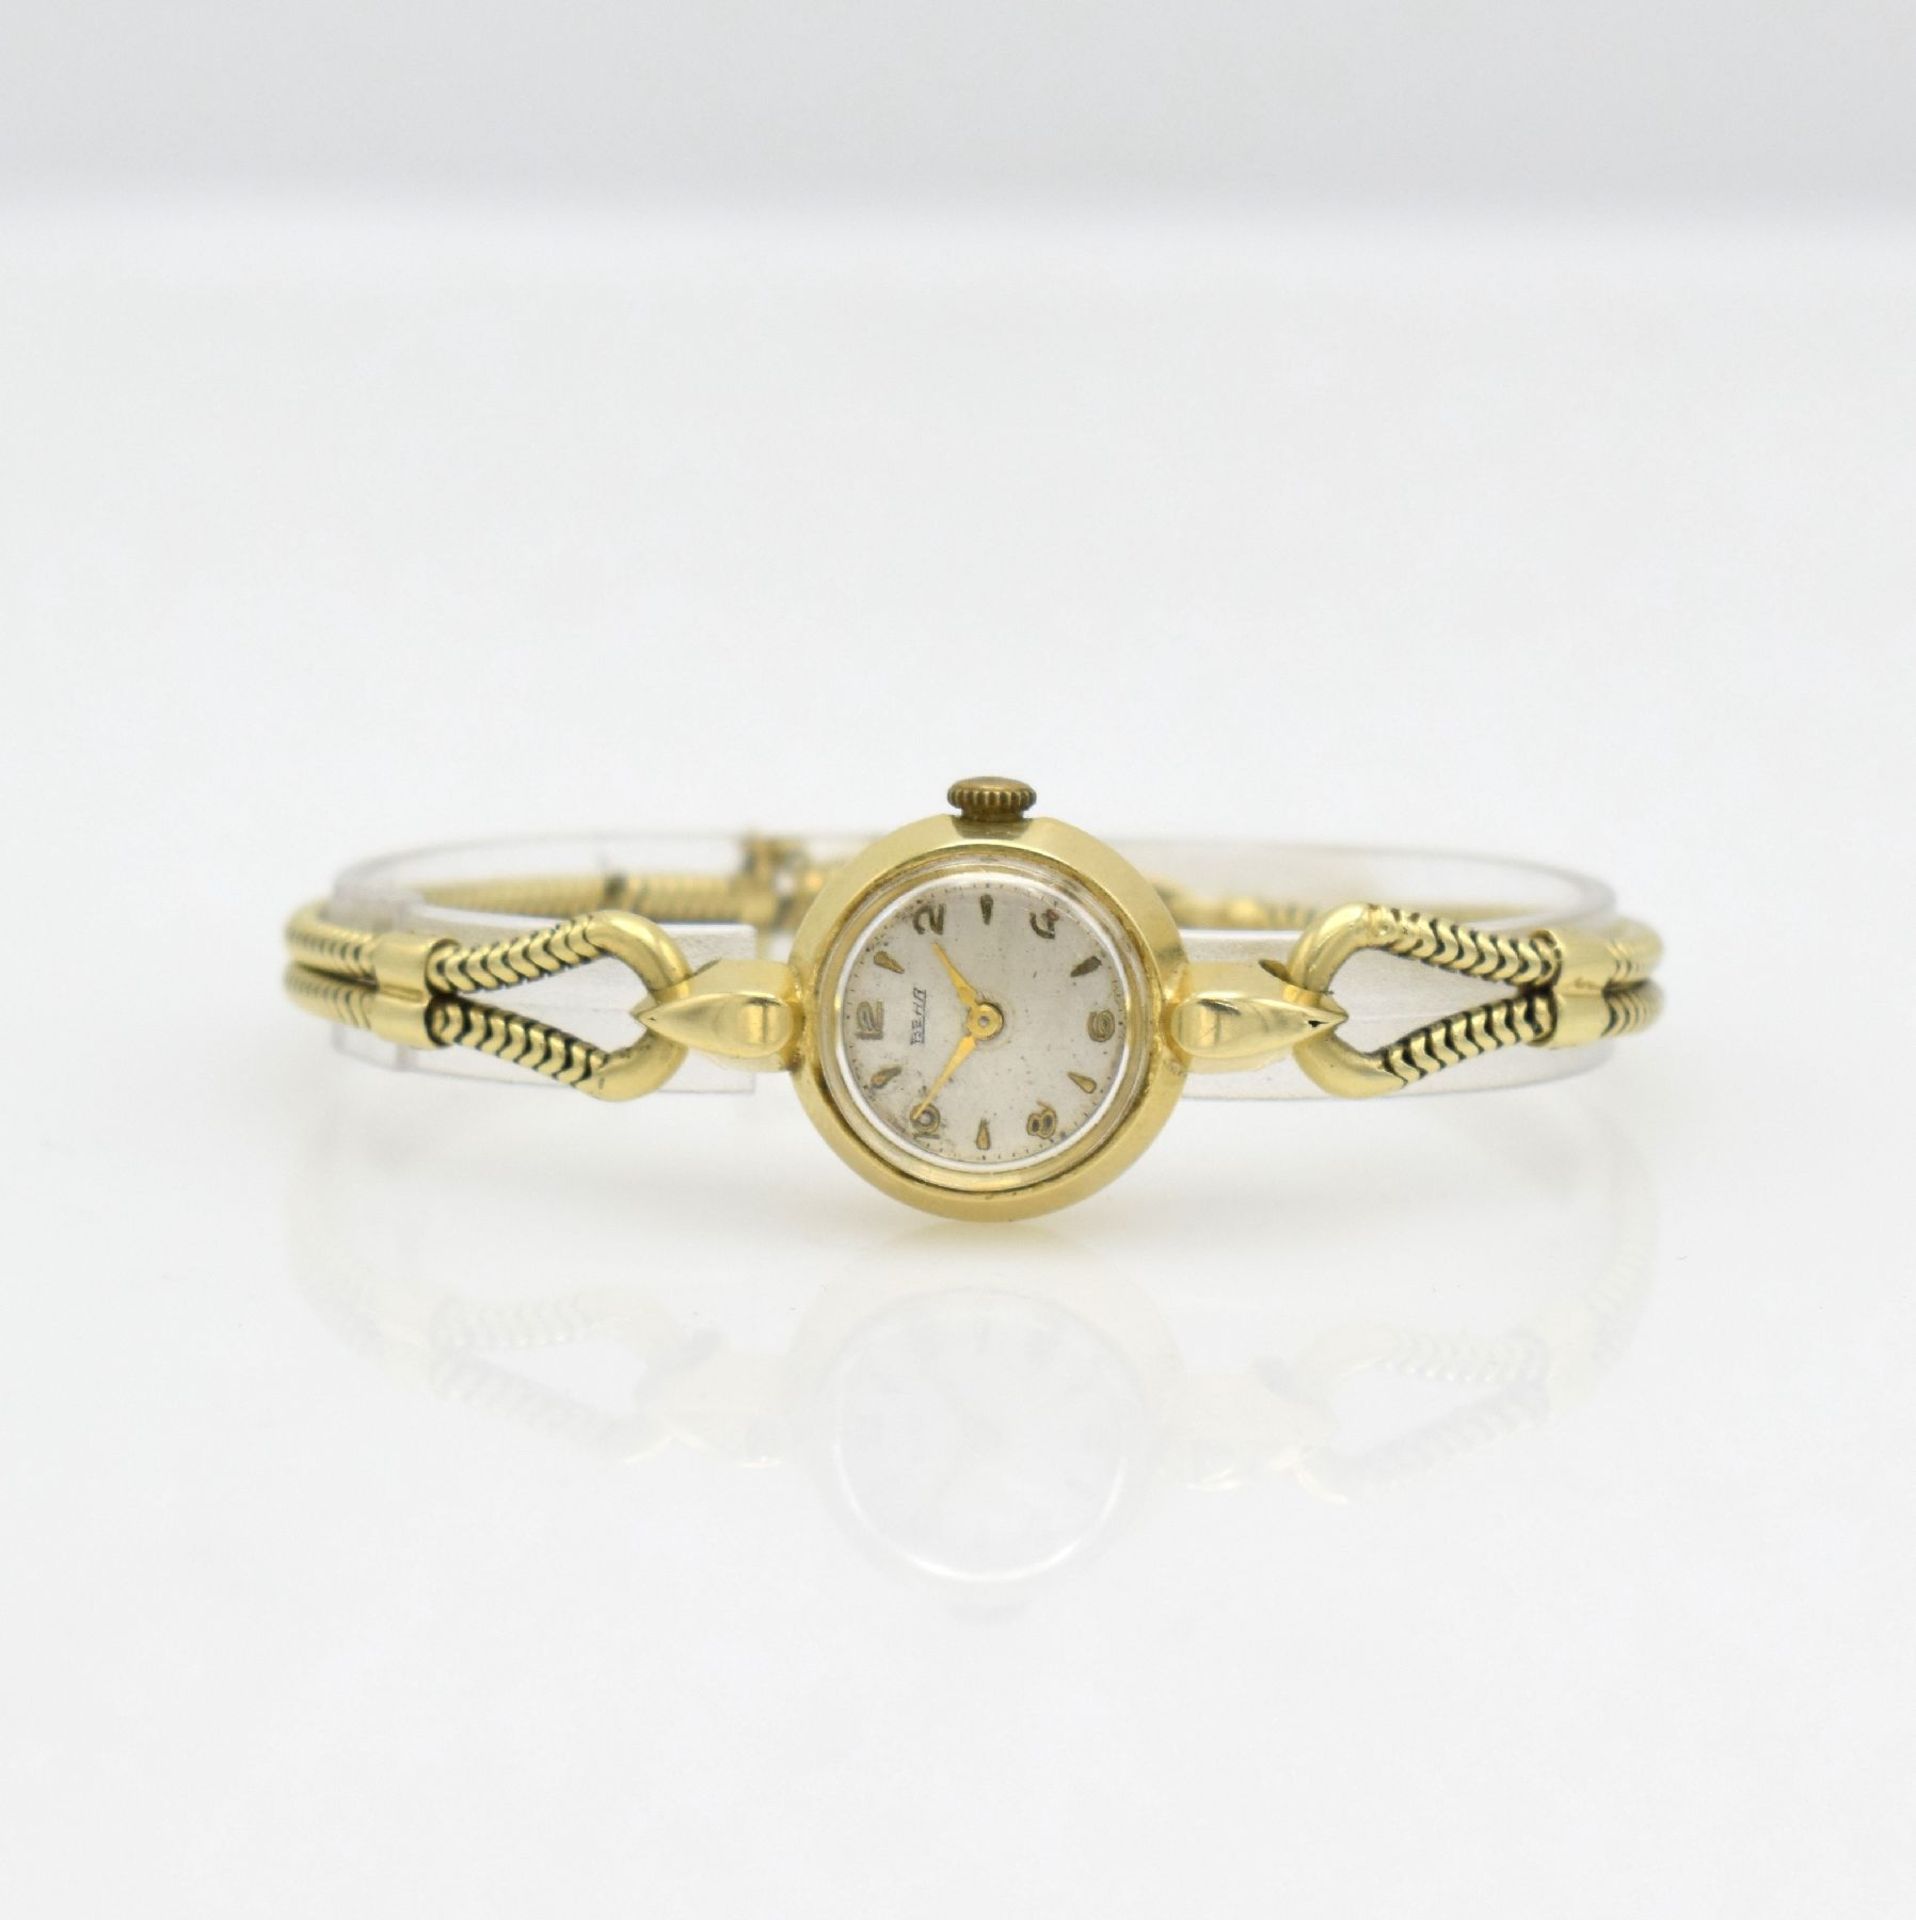 BEHA 14k yellow gold ladies wristwatch Switzerland/Germany around 1950, manual winding, pressed down